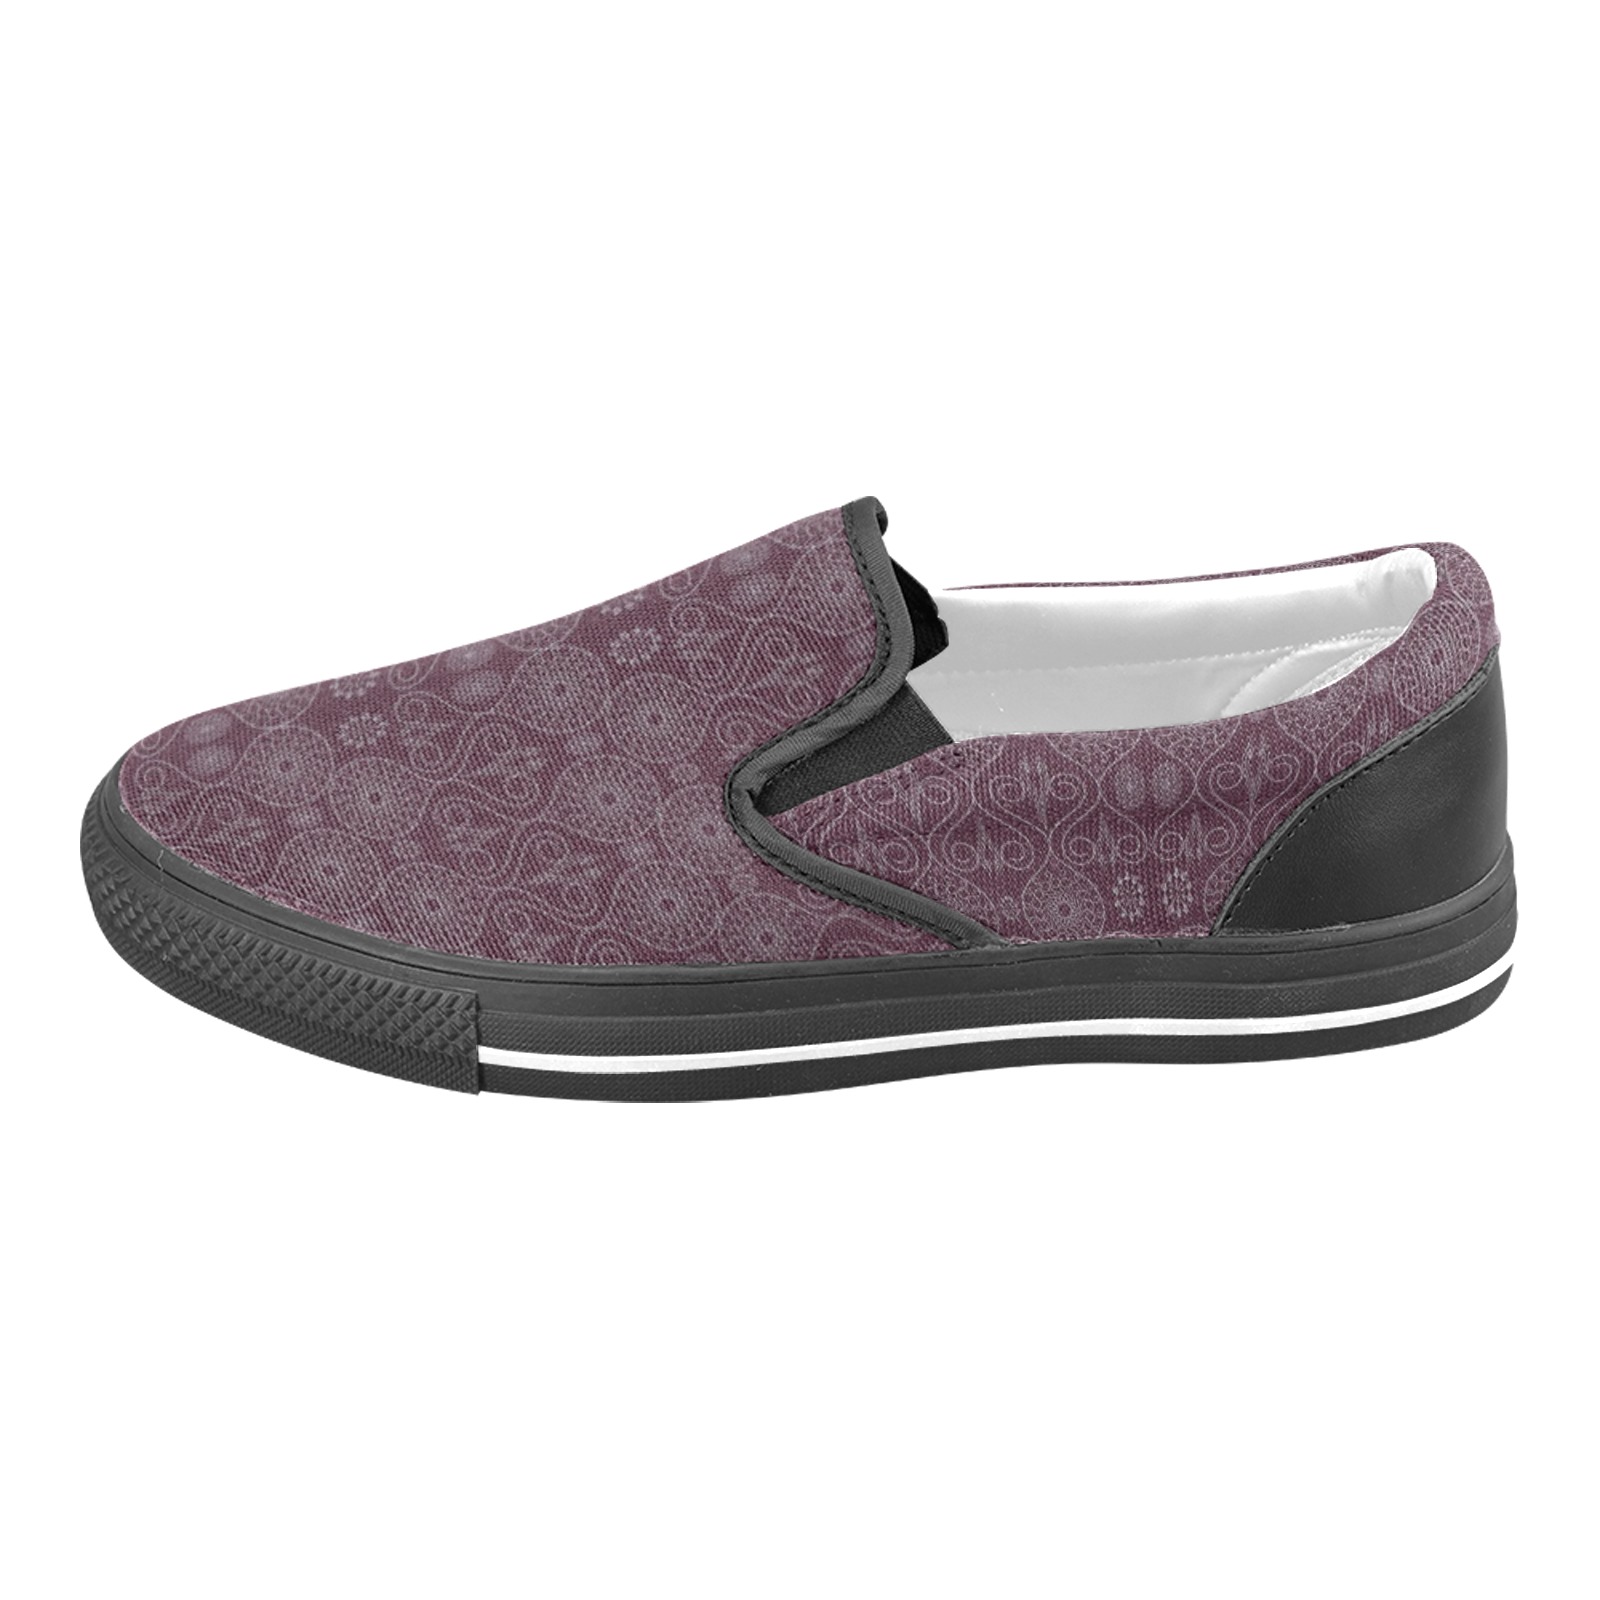 Wine fibrous textile octopus seeds patterned Men's Slip-on Canvas Shoes (Model 019)